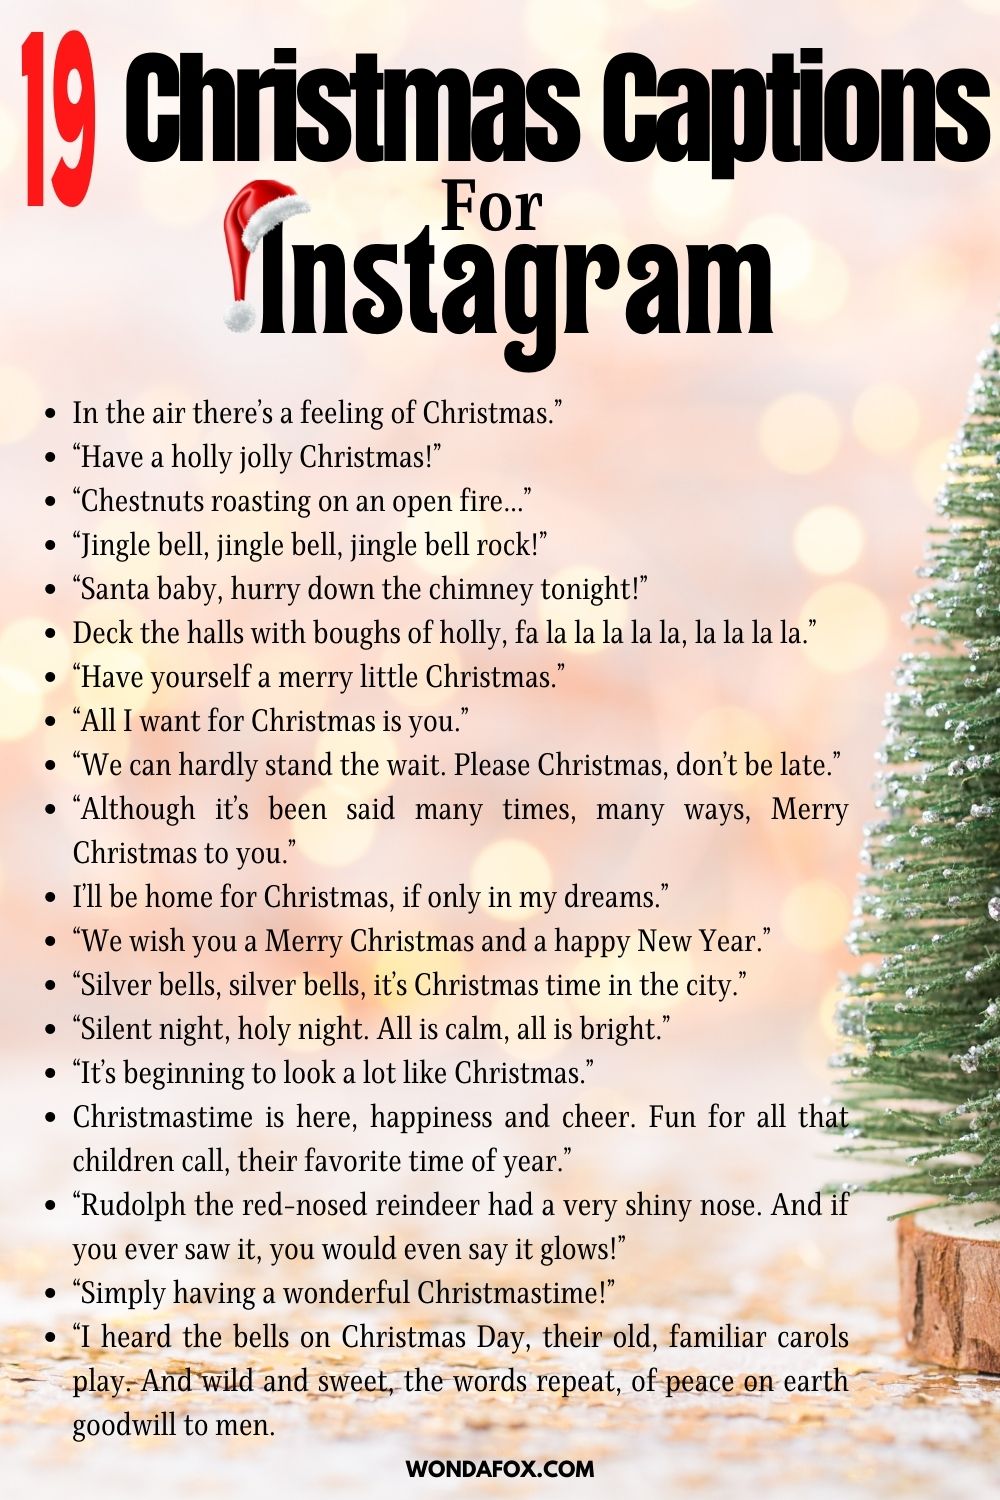 Christmas Captions For Instagram